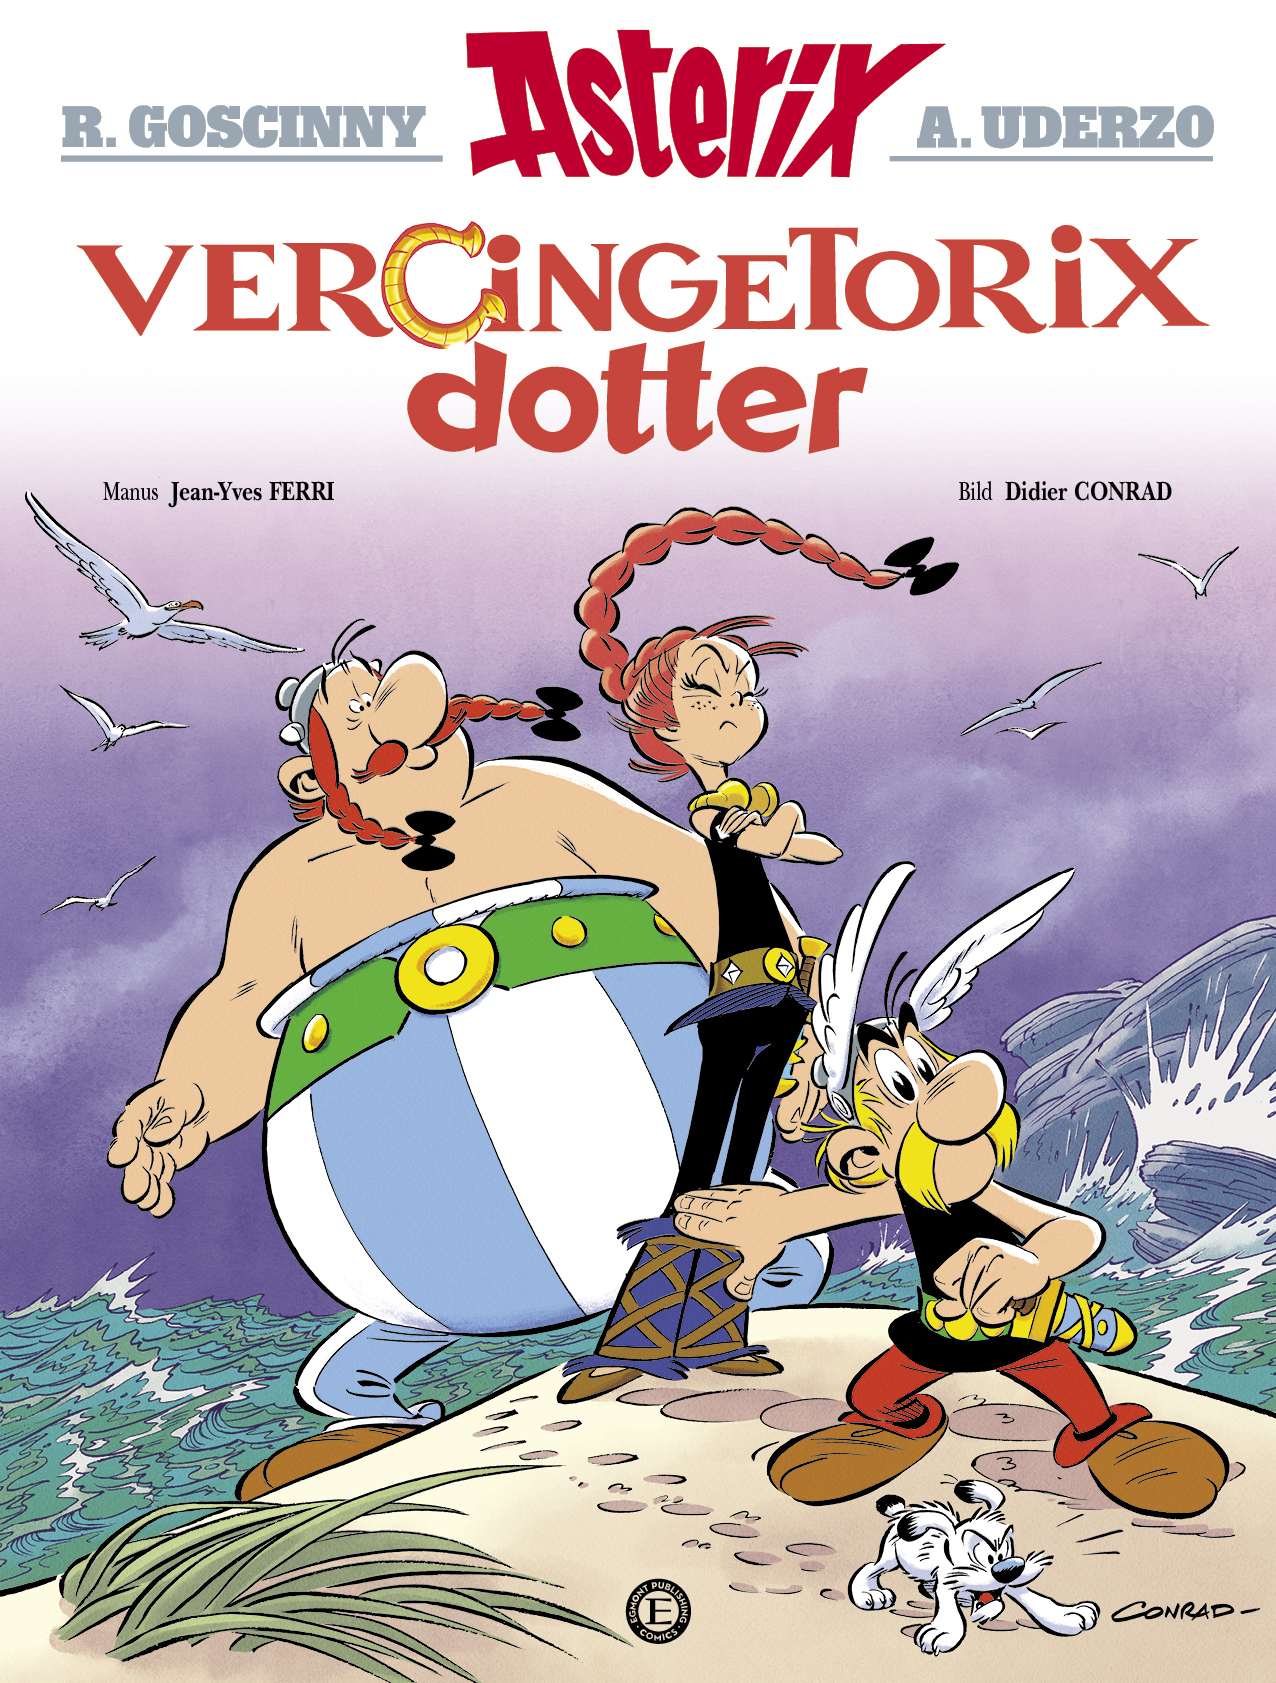 Asterix 38 : Vercingetorix dotter - R Goscinny & A Uderzo